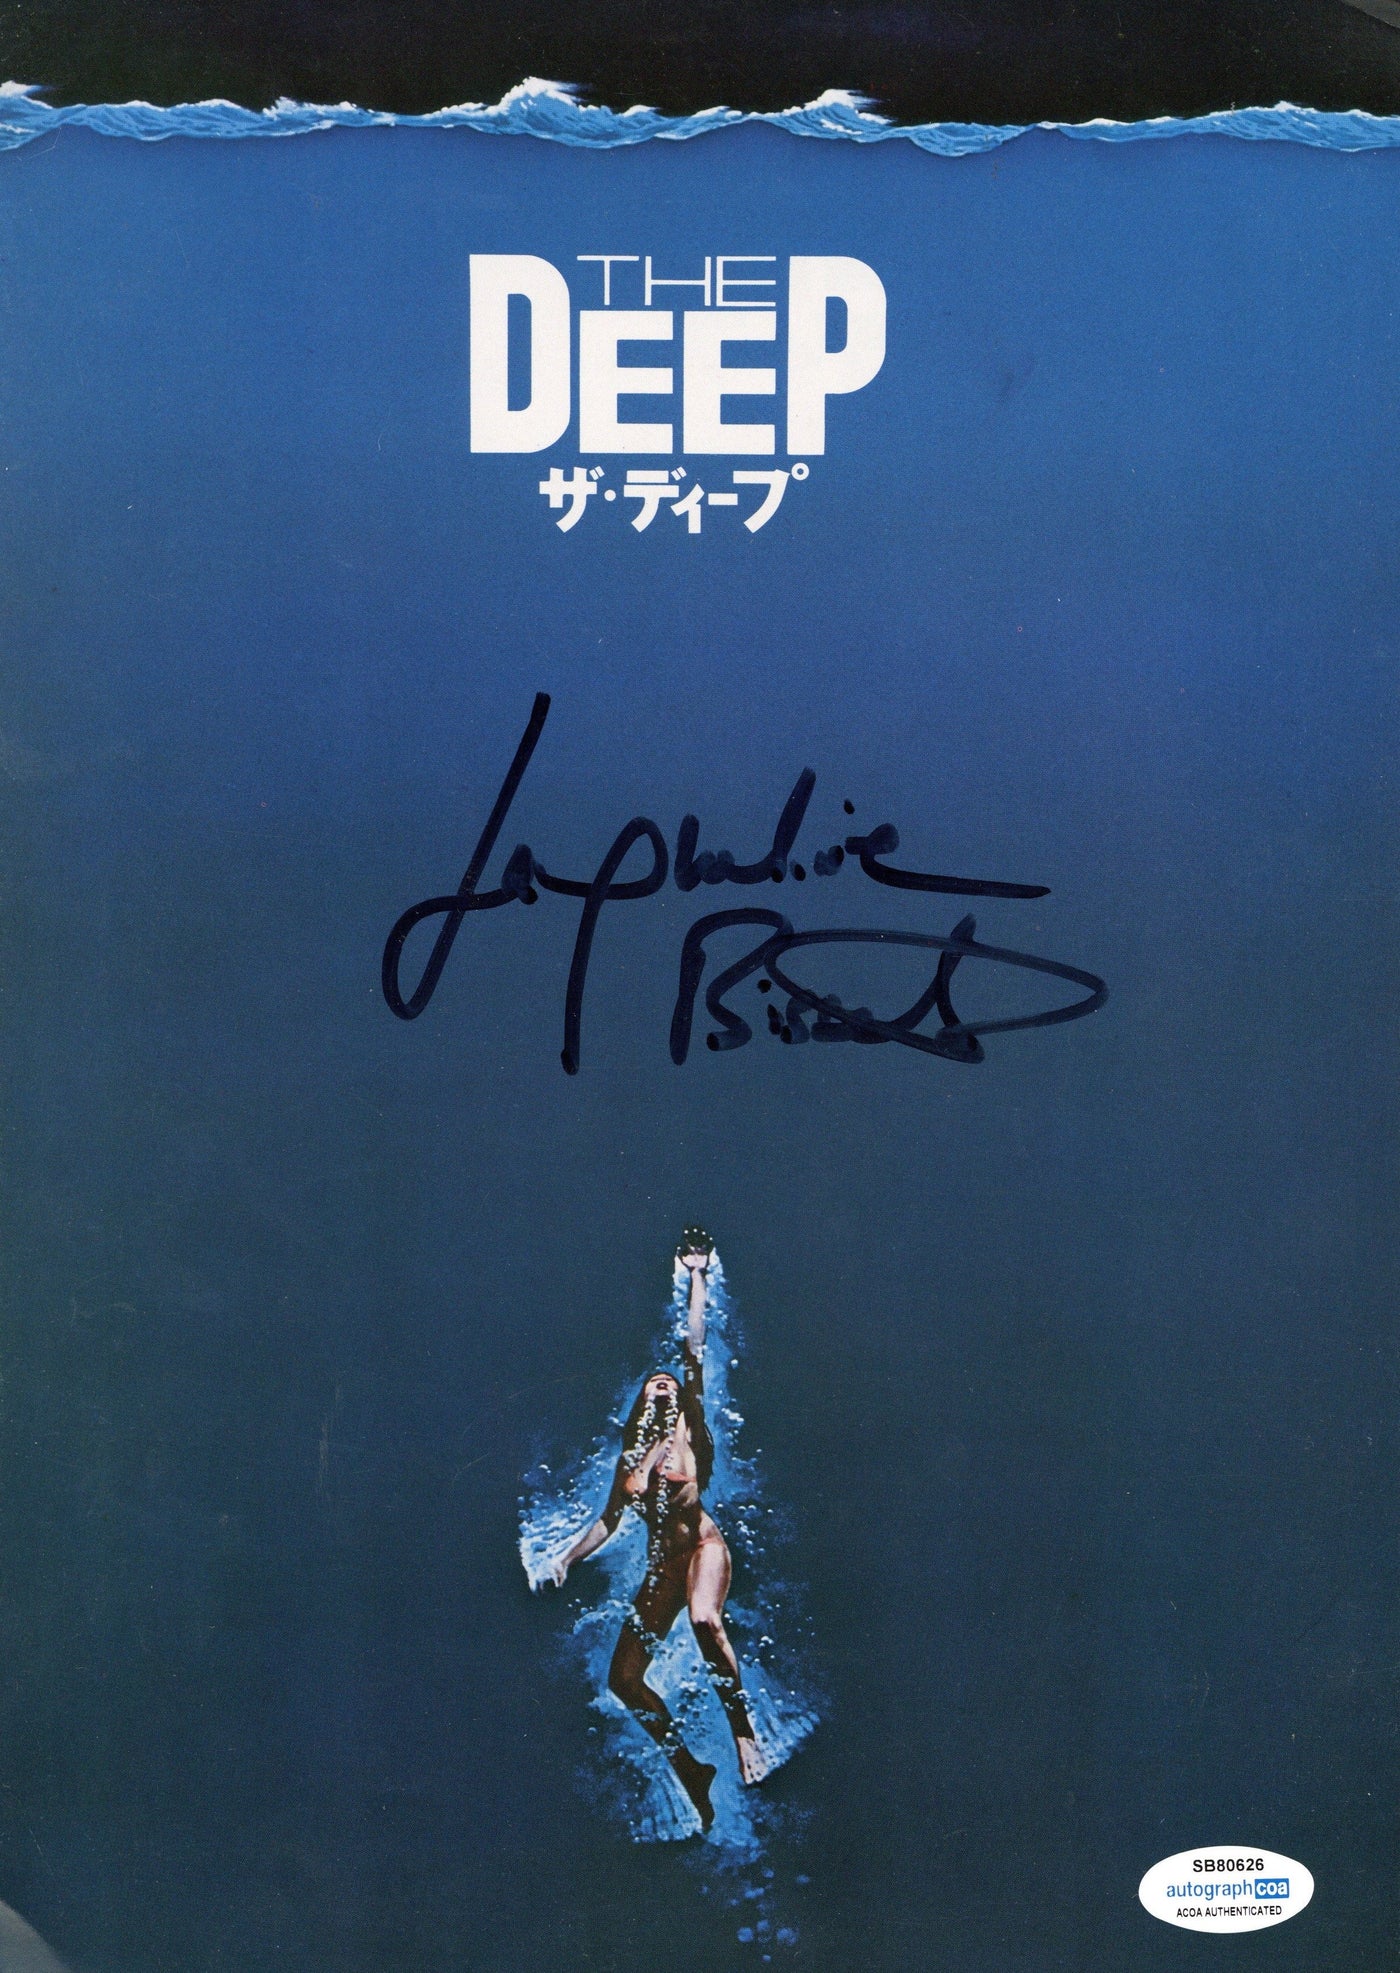 Jacqueline Bisset Signed The Deep Movie Program Book Autographed ACOA